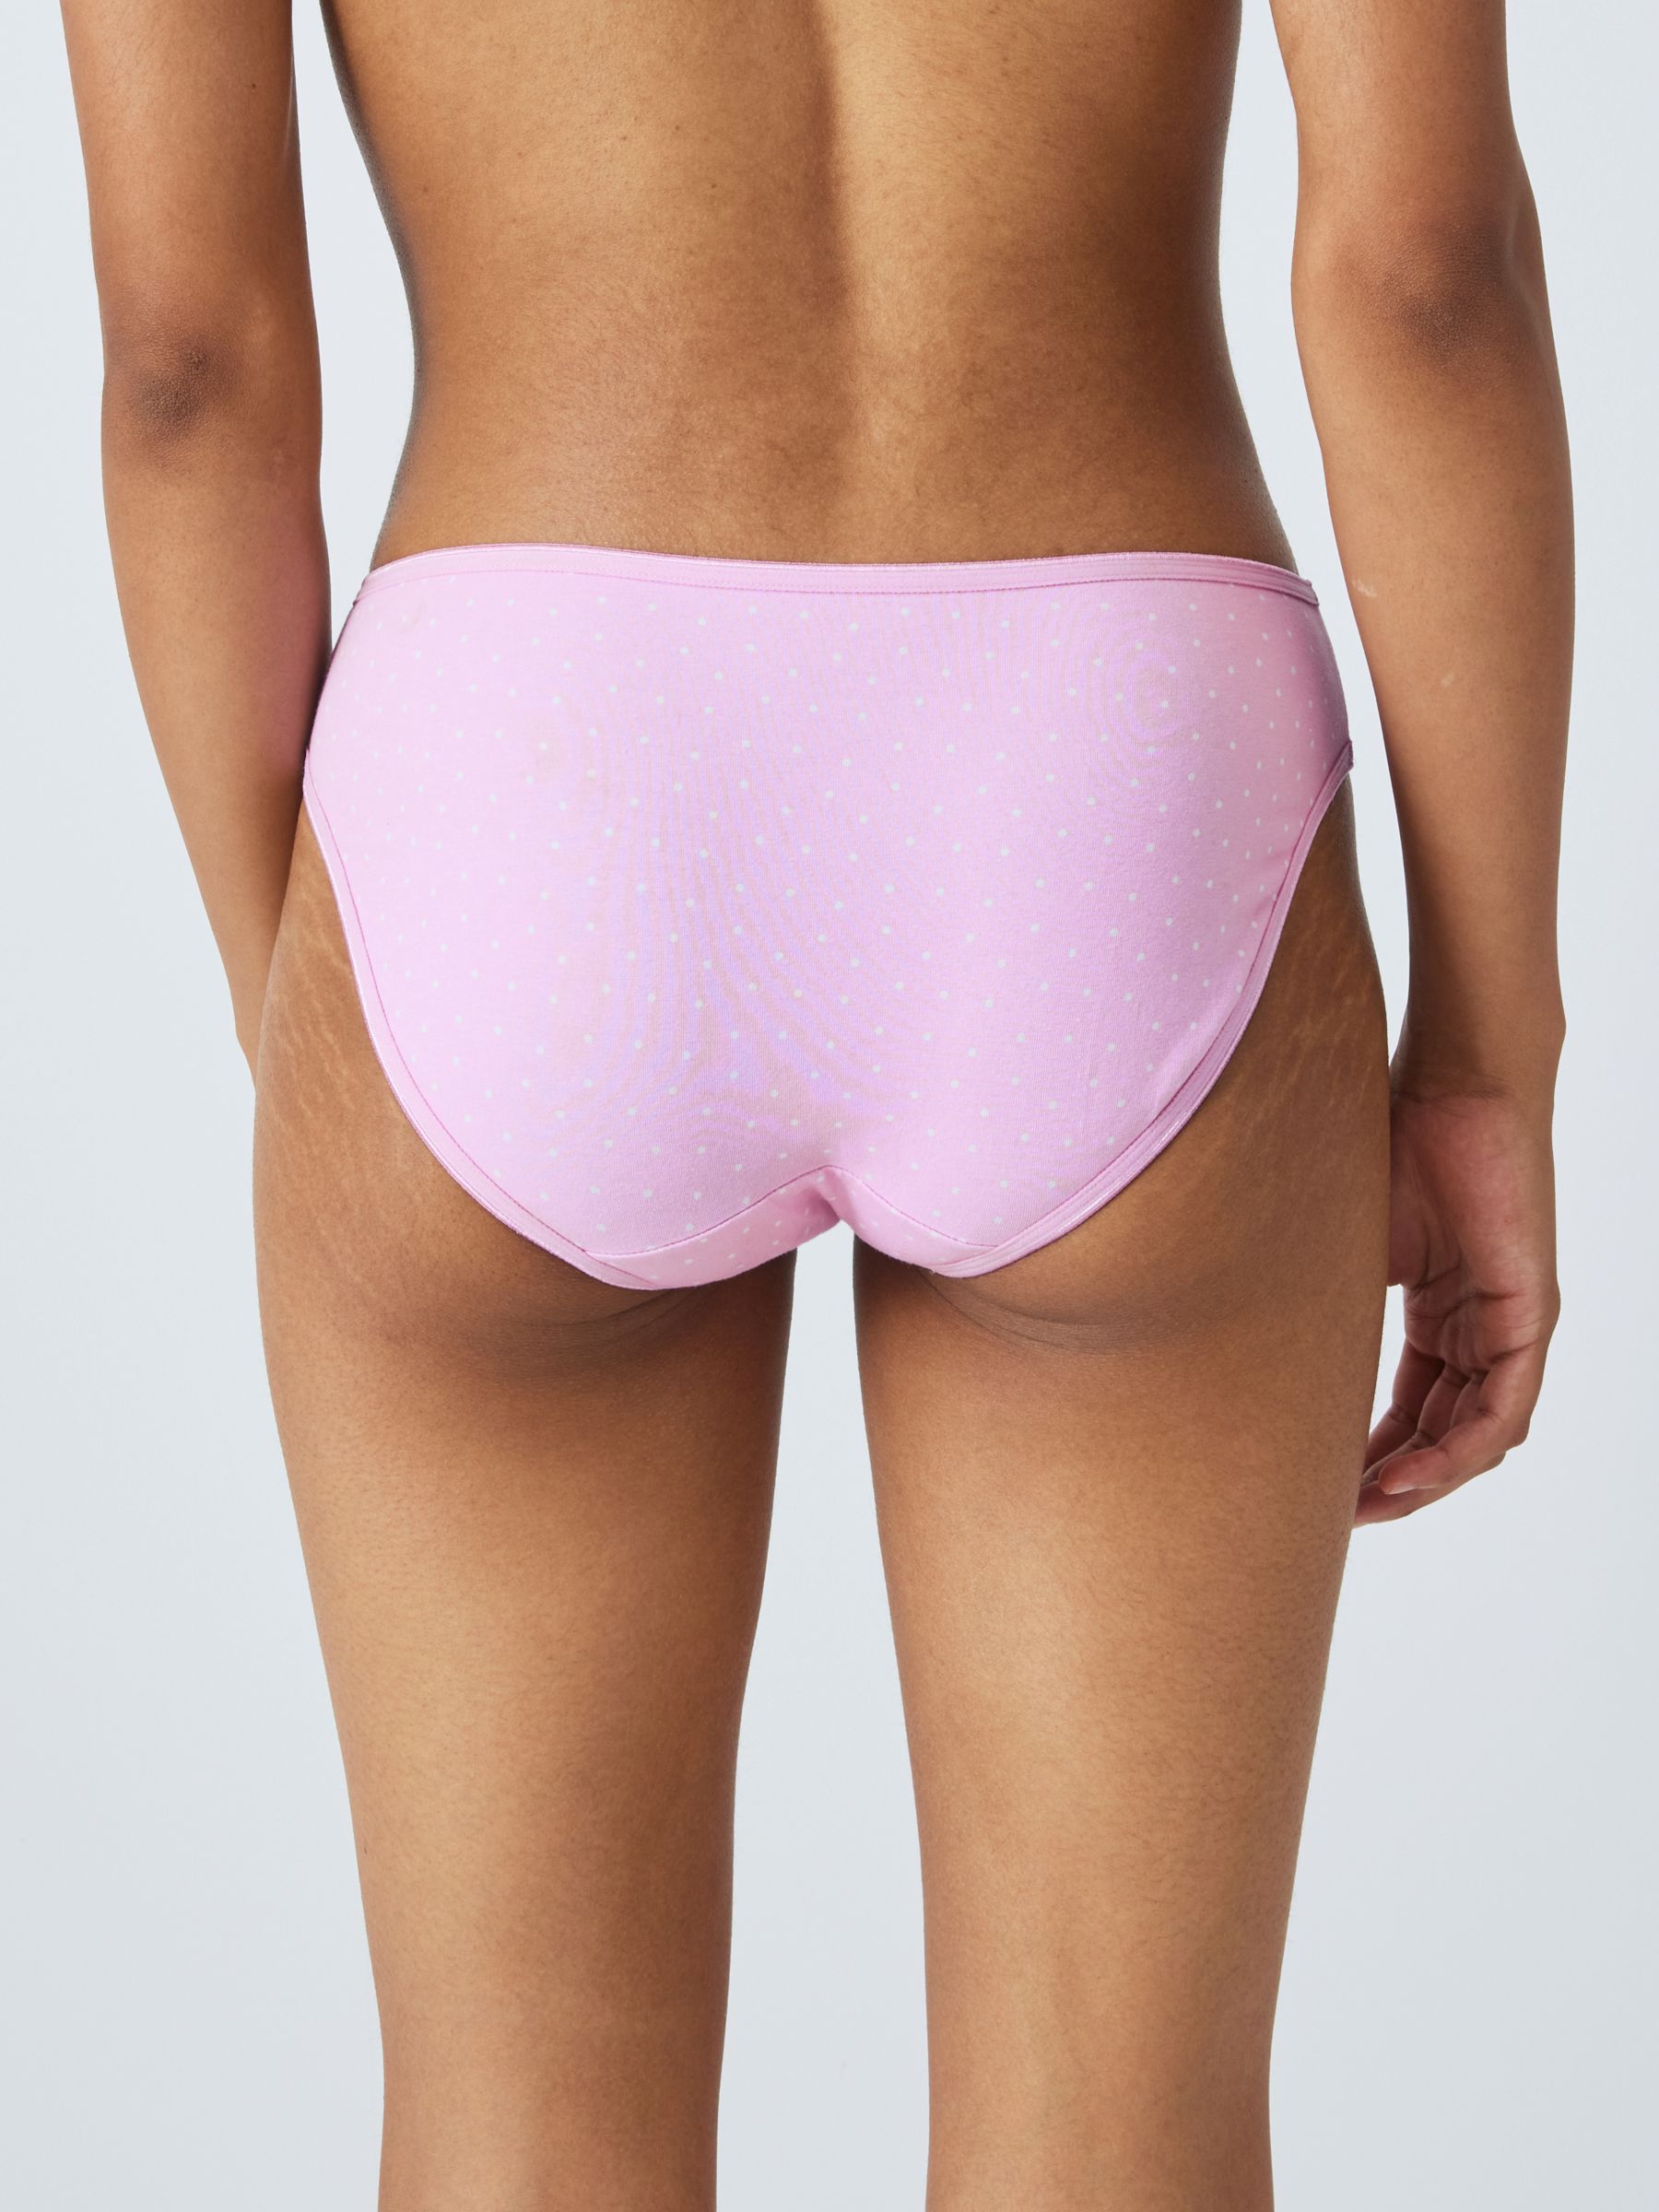 Buy John Lewis Cotton Bikini Briefs, Pack of 5, Green/Pastel Online at johnlewis.com